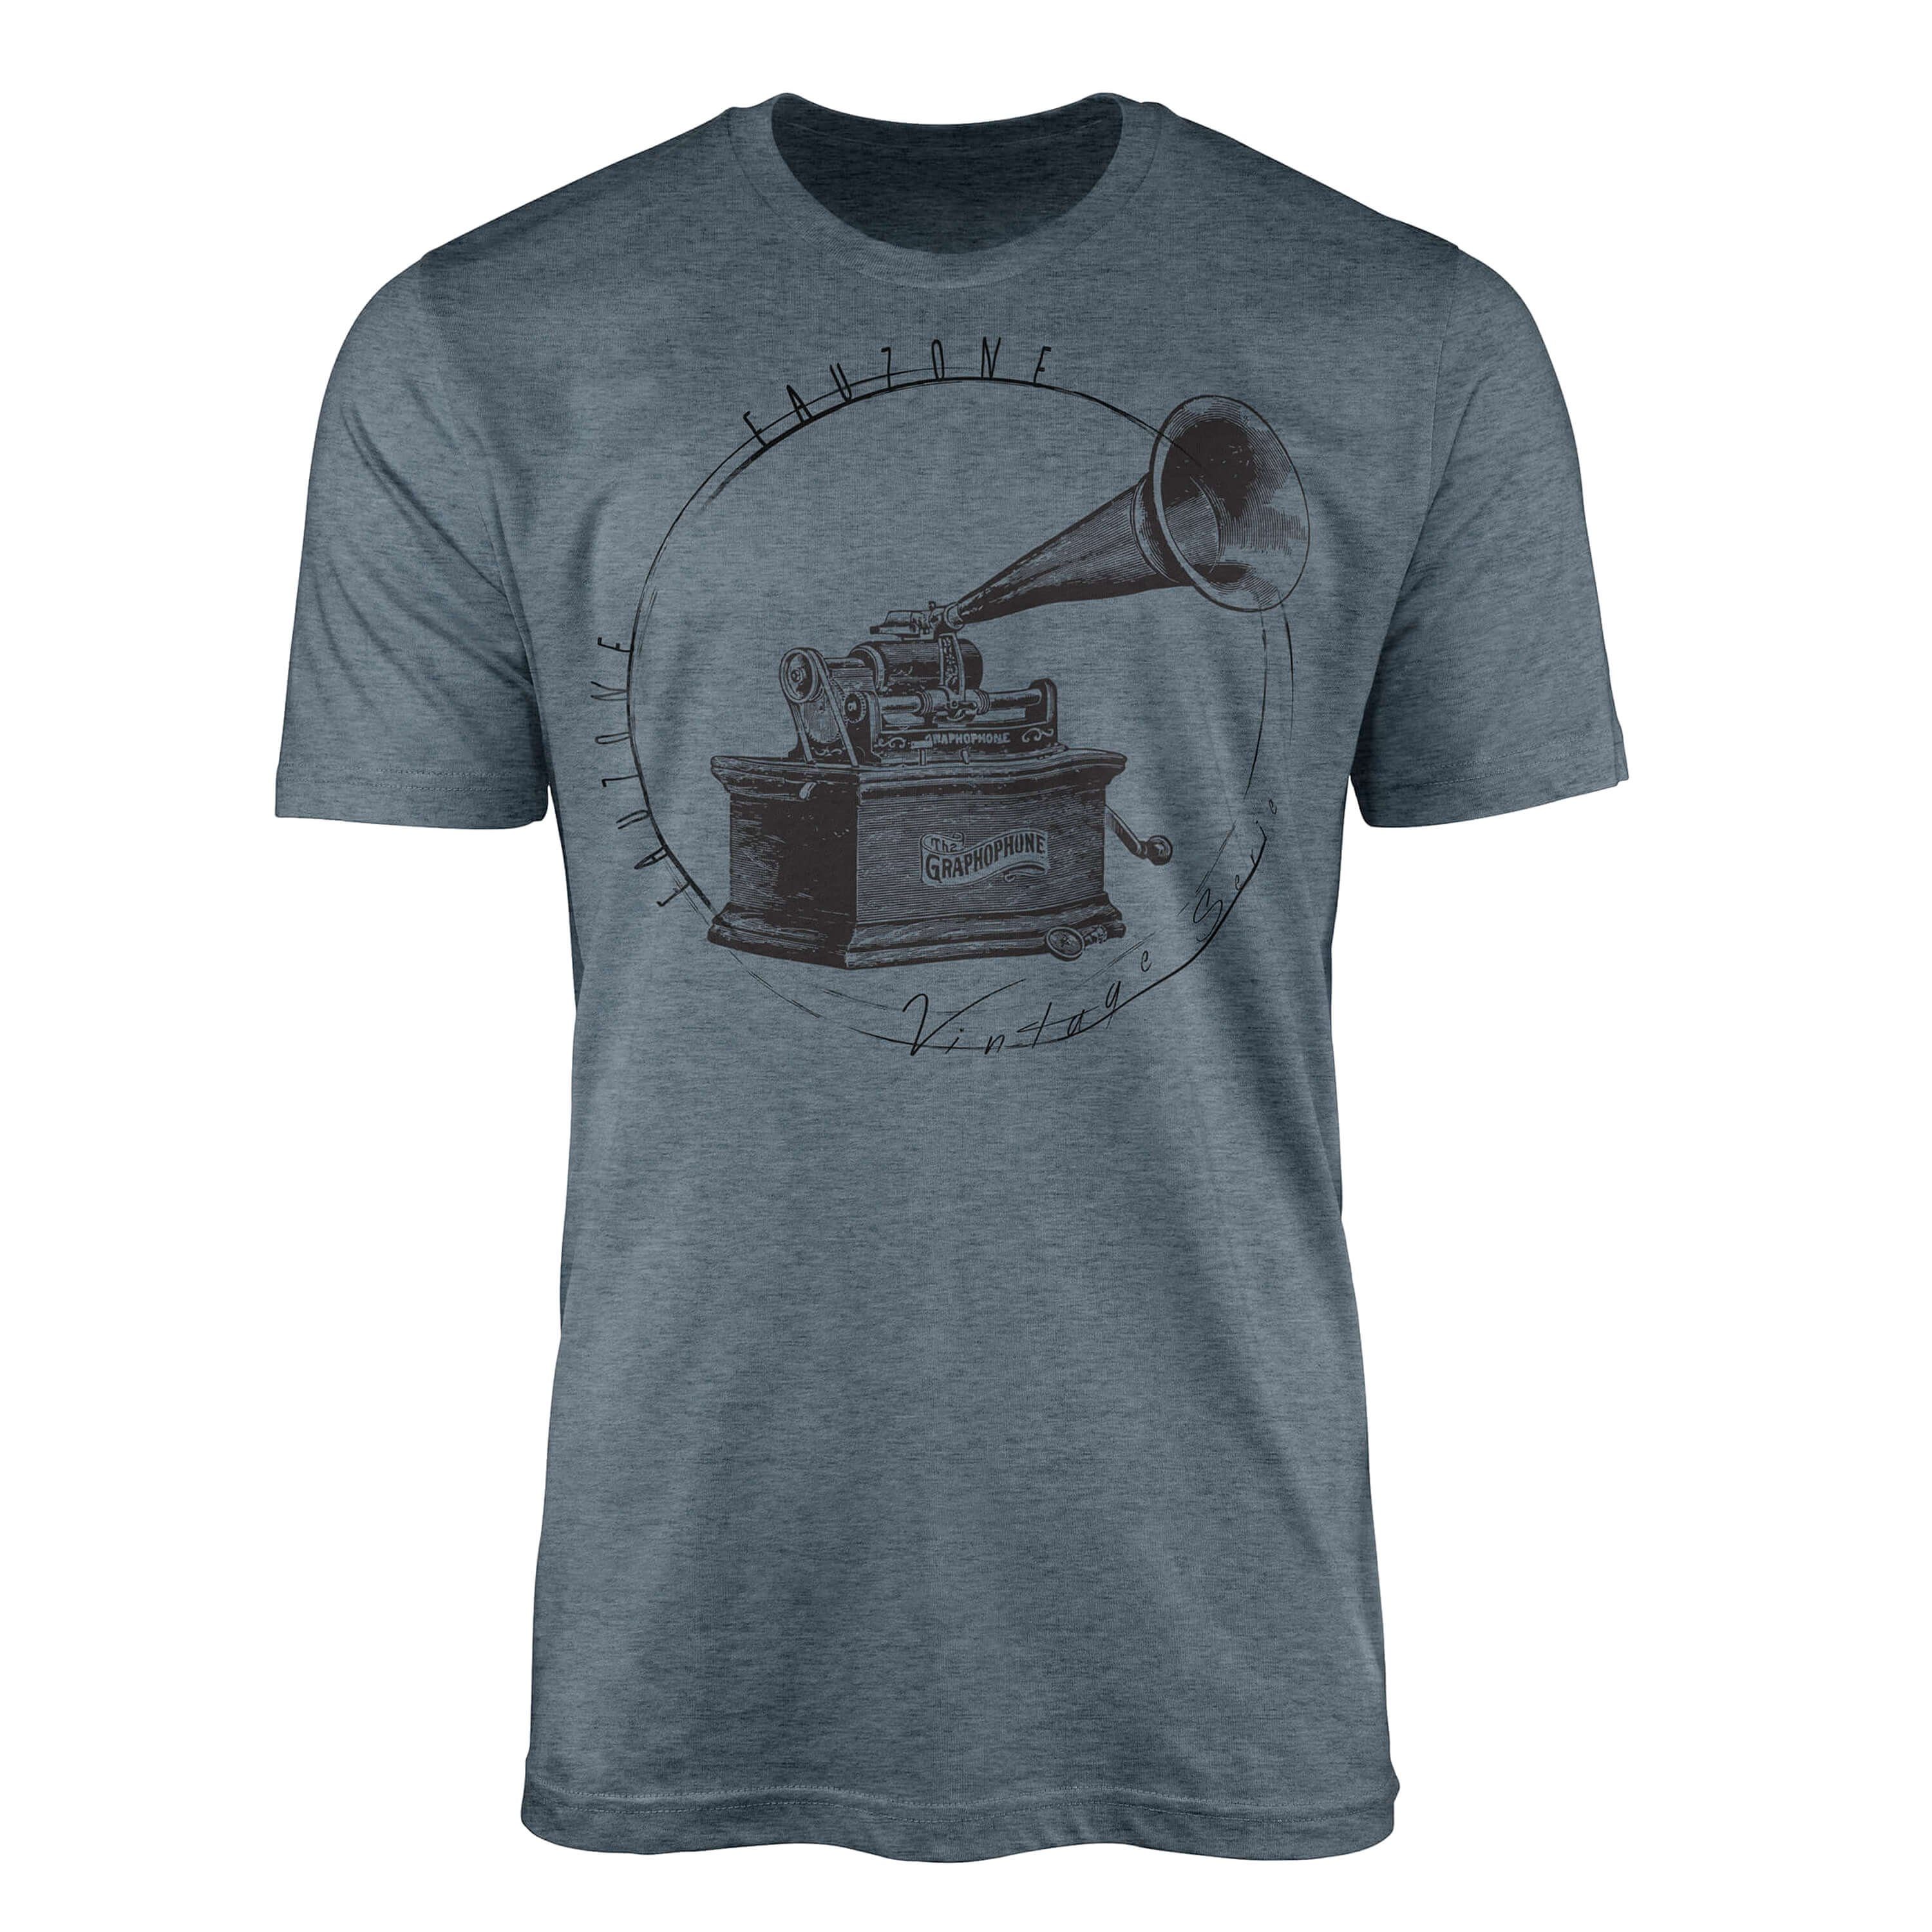 Sinus Art T-Shirt Vintage Herren T-Shirt Grammophon Indigo | T-Shirts